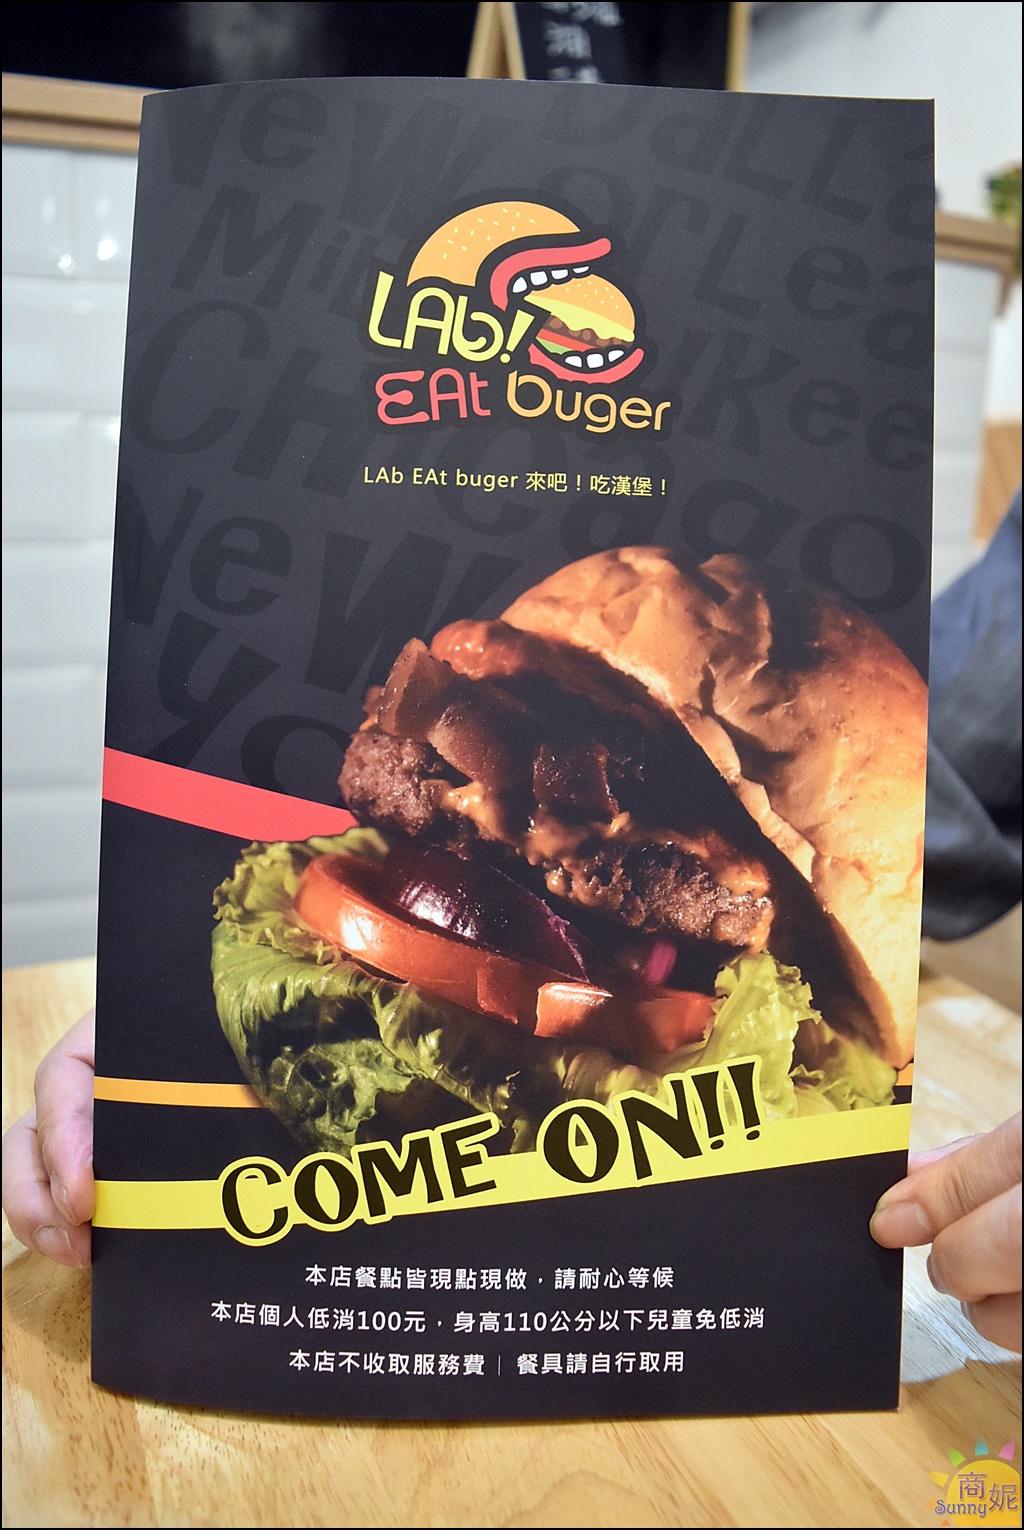 LAb EAt buger價位,LAb EAt buger消費方式,LAb EAt buger菜單,來吧吃漢堡菜單,台中漢堡,台中西區美食 @商妮吃喝遊樂